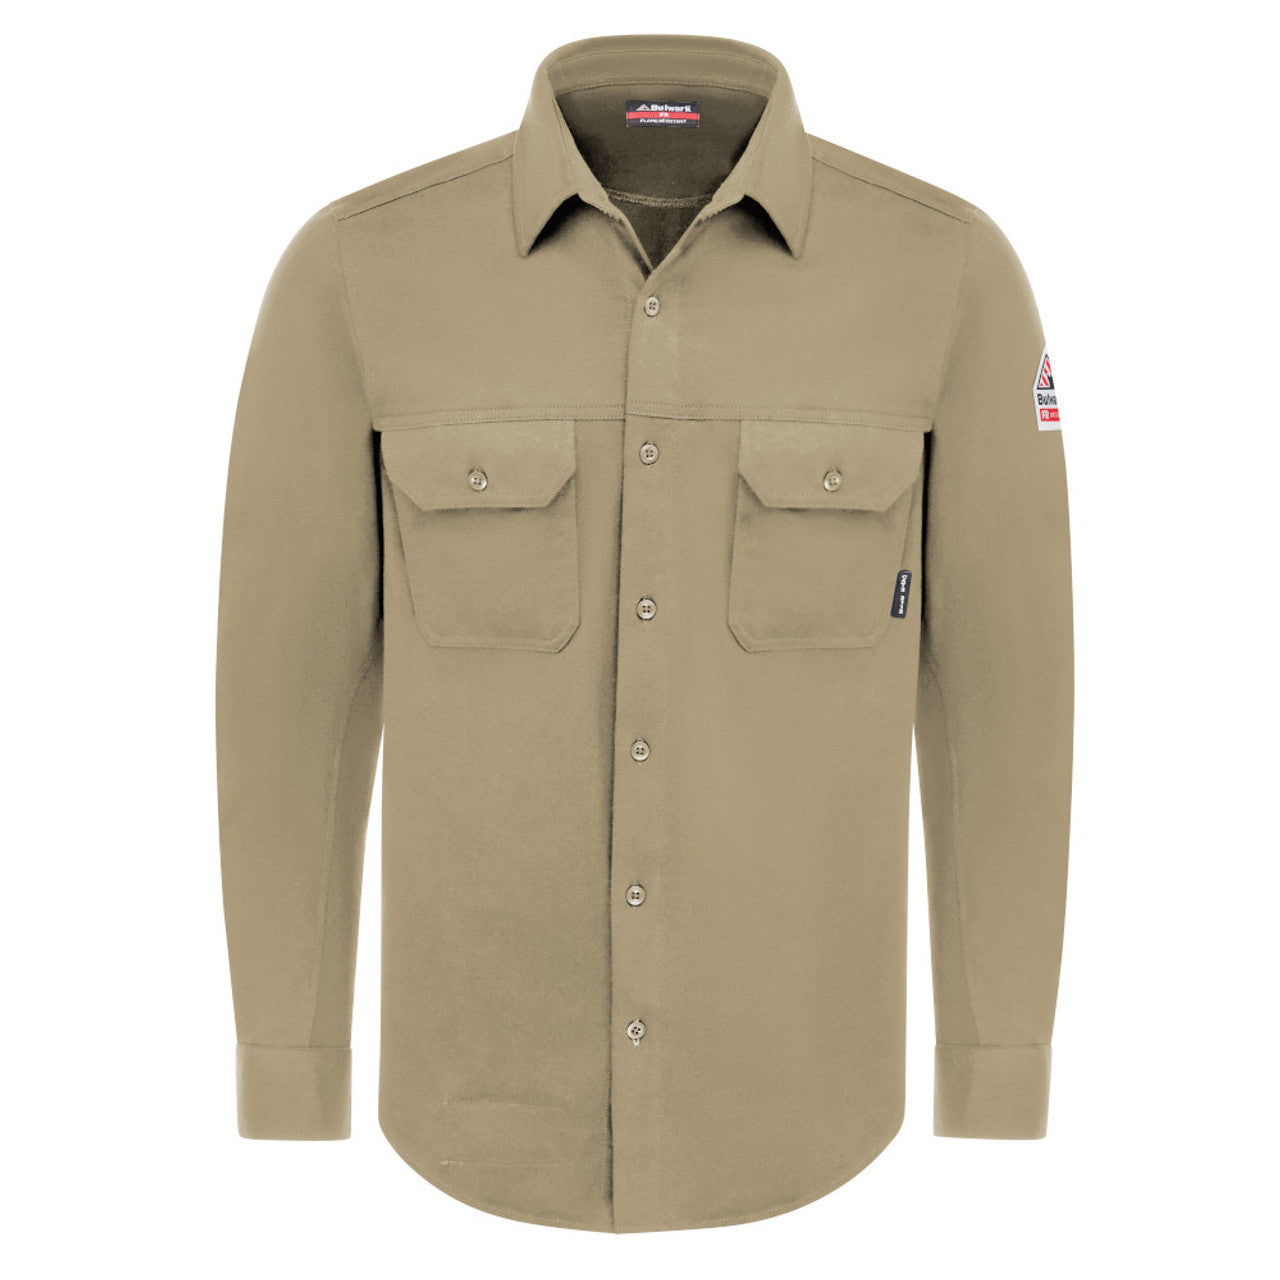 Bulwark FR Men's Flex Knit Button Down Work Shirt - STG4 Khaki-eSafety Supplies, Inc